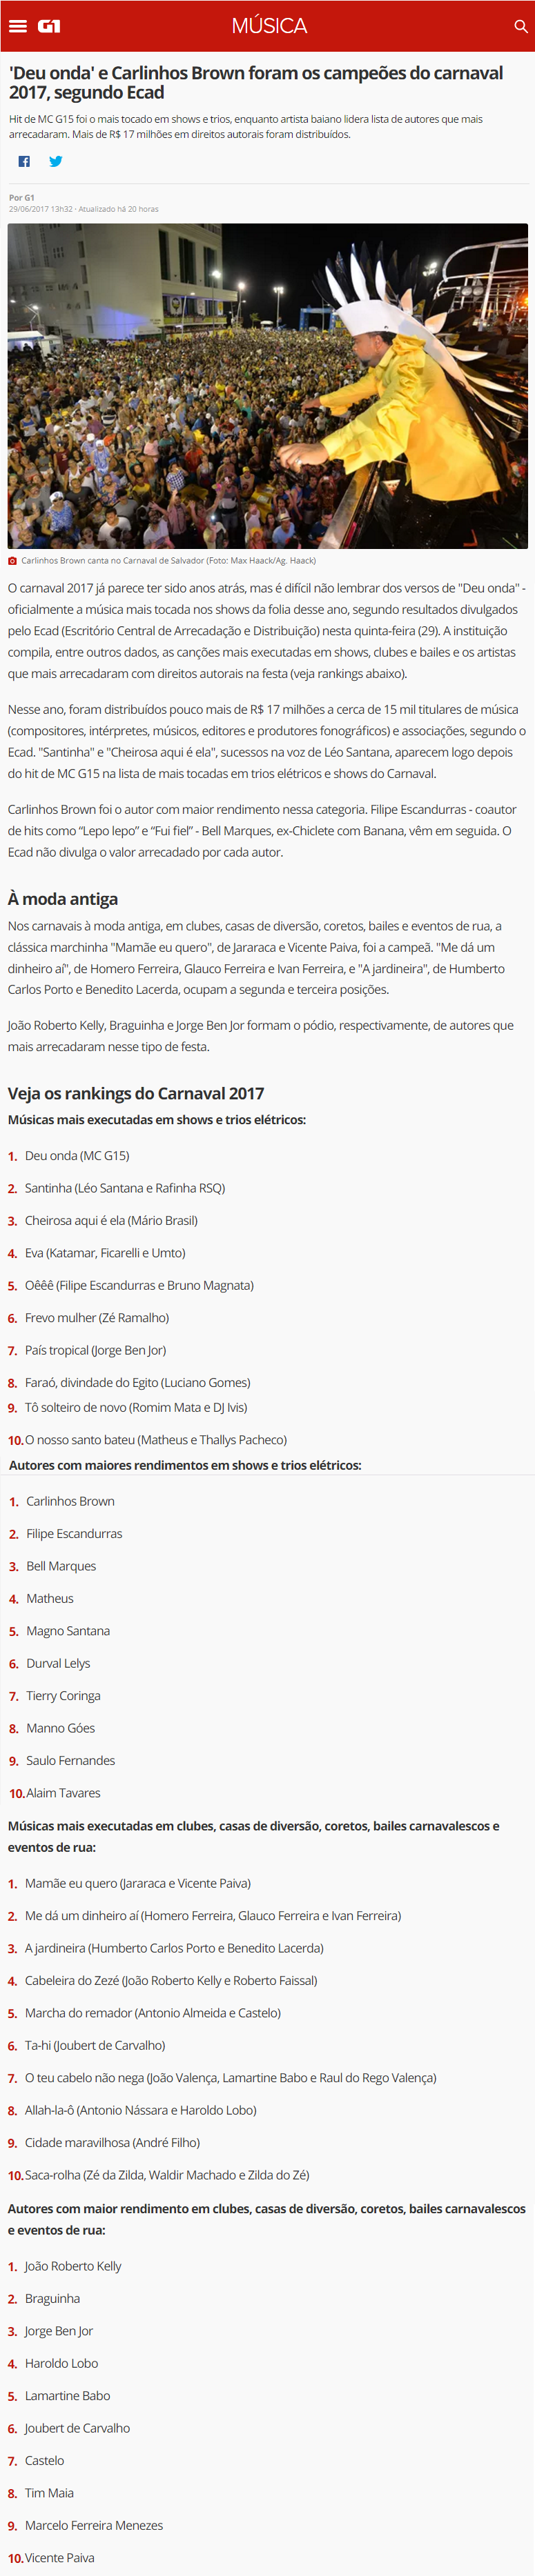 G1-Carnaval2017-Resultados.png